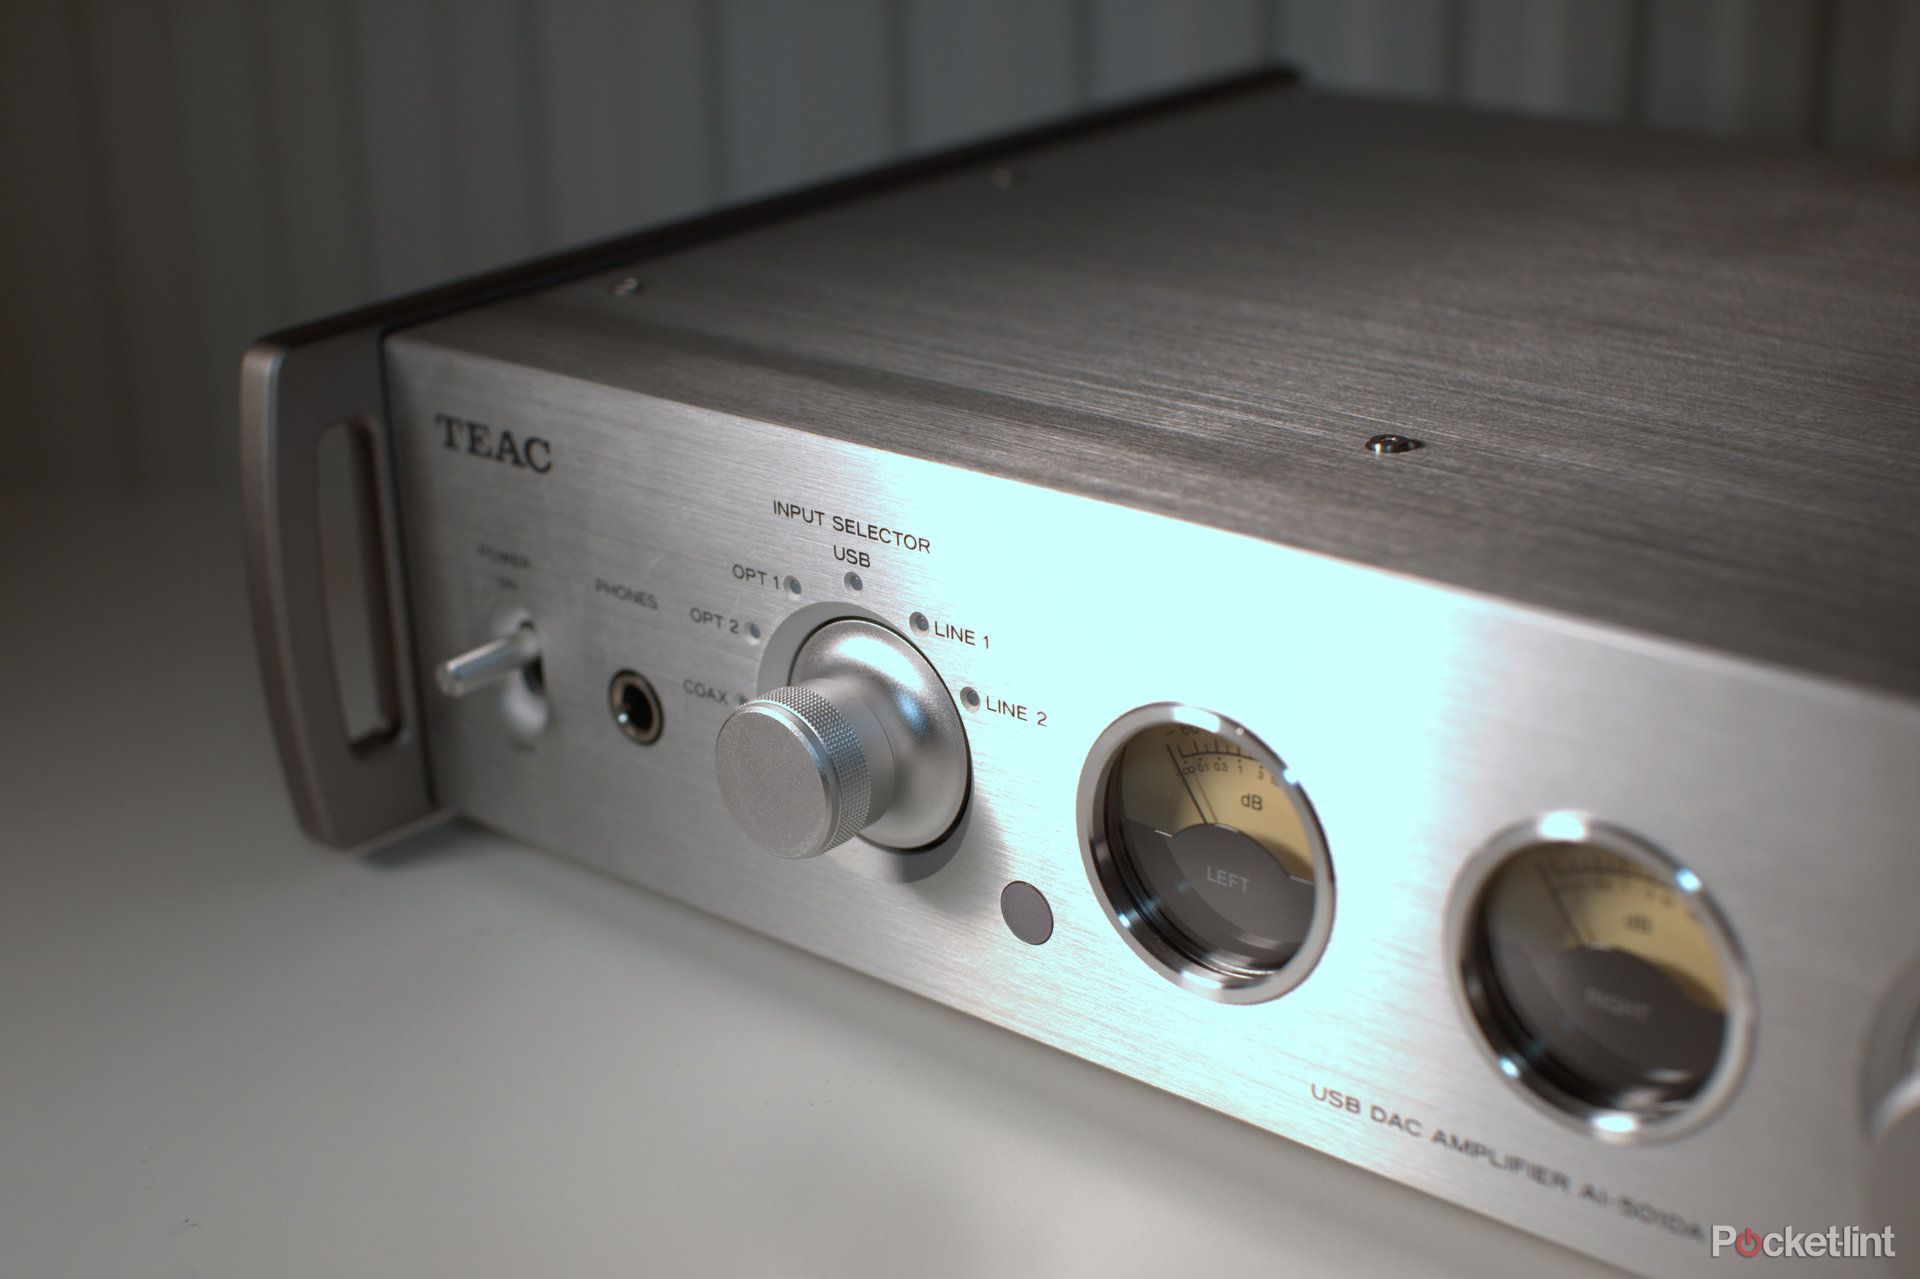 teac usb dac amplifier ai 501da review image 12